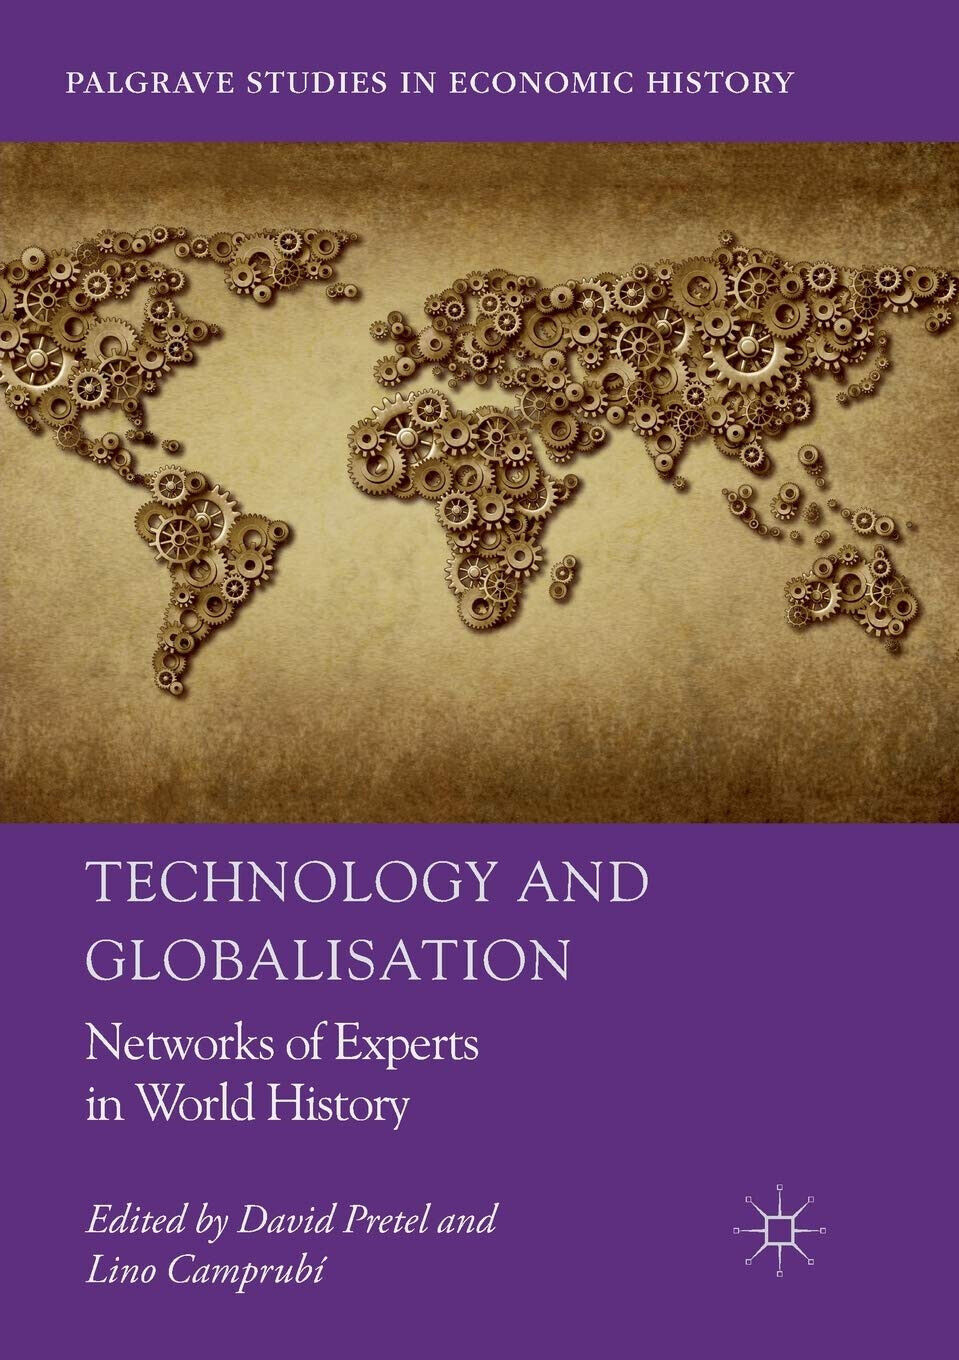 Technology and Globalisation -  David Pretel - Palgrave, 2018